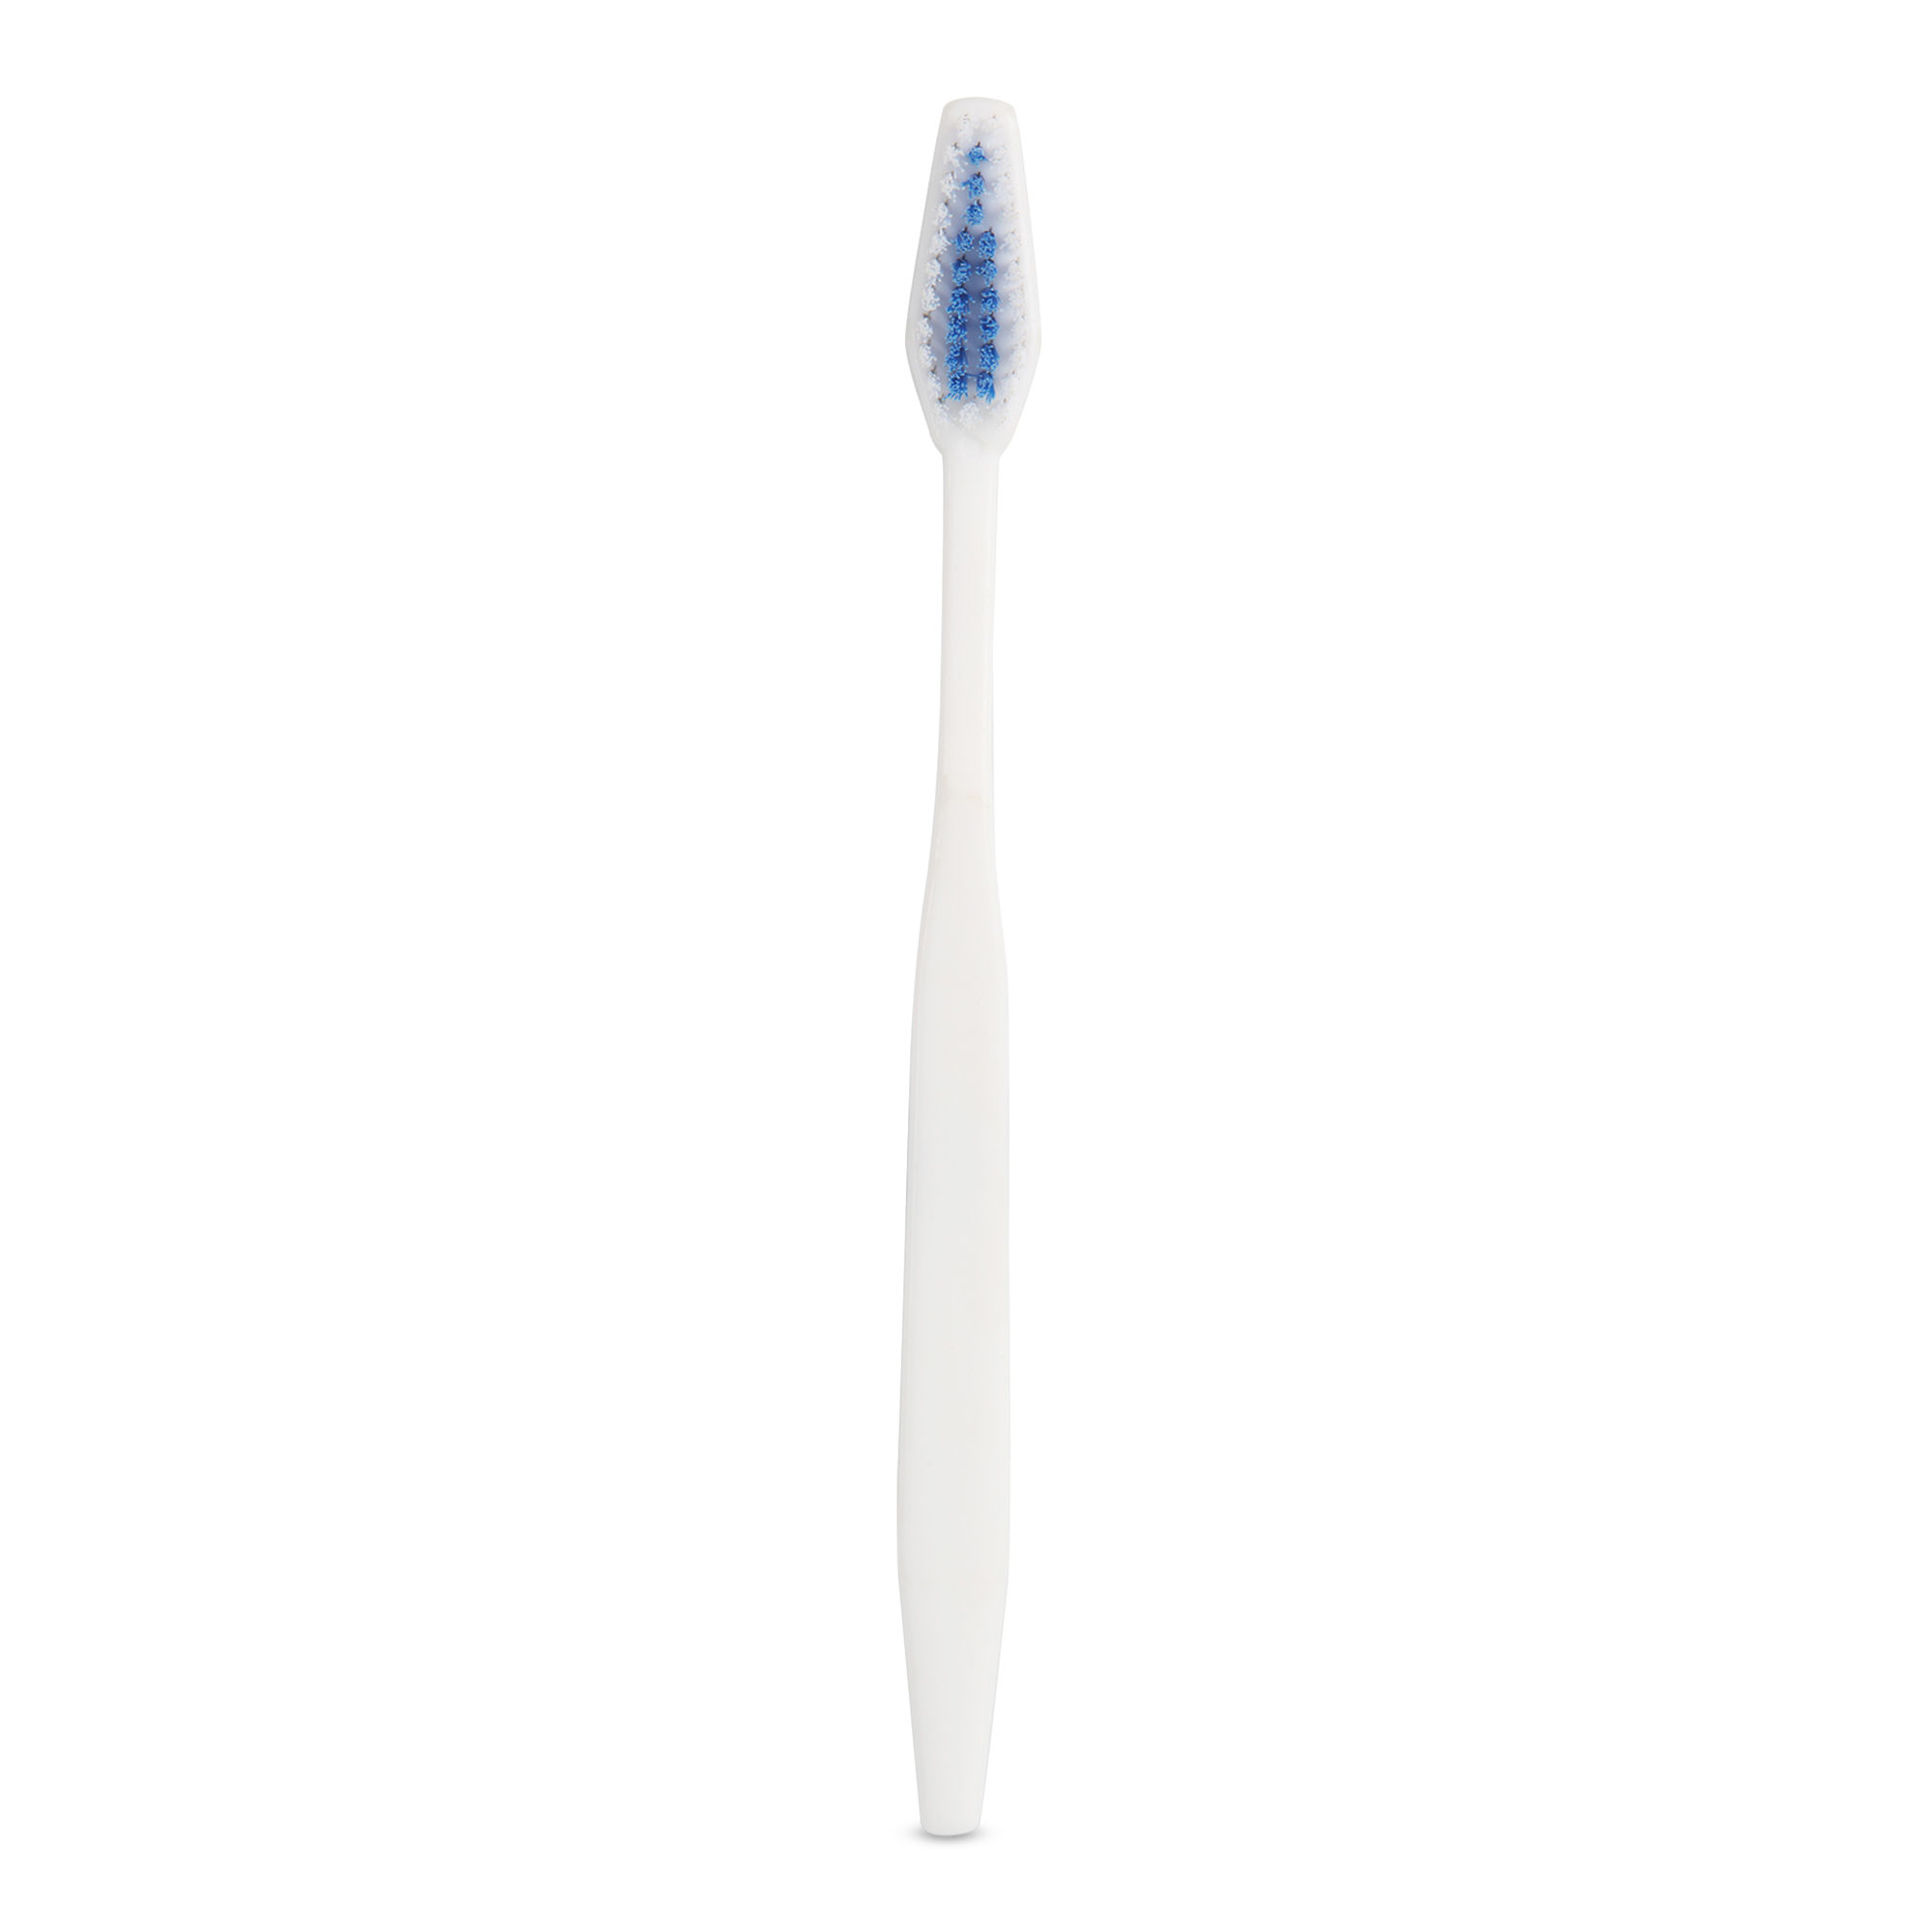 Hotel Plastic Toothbrush - Straight Handle